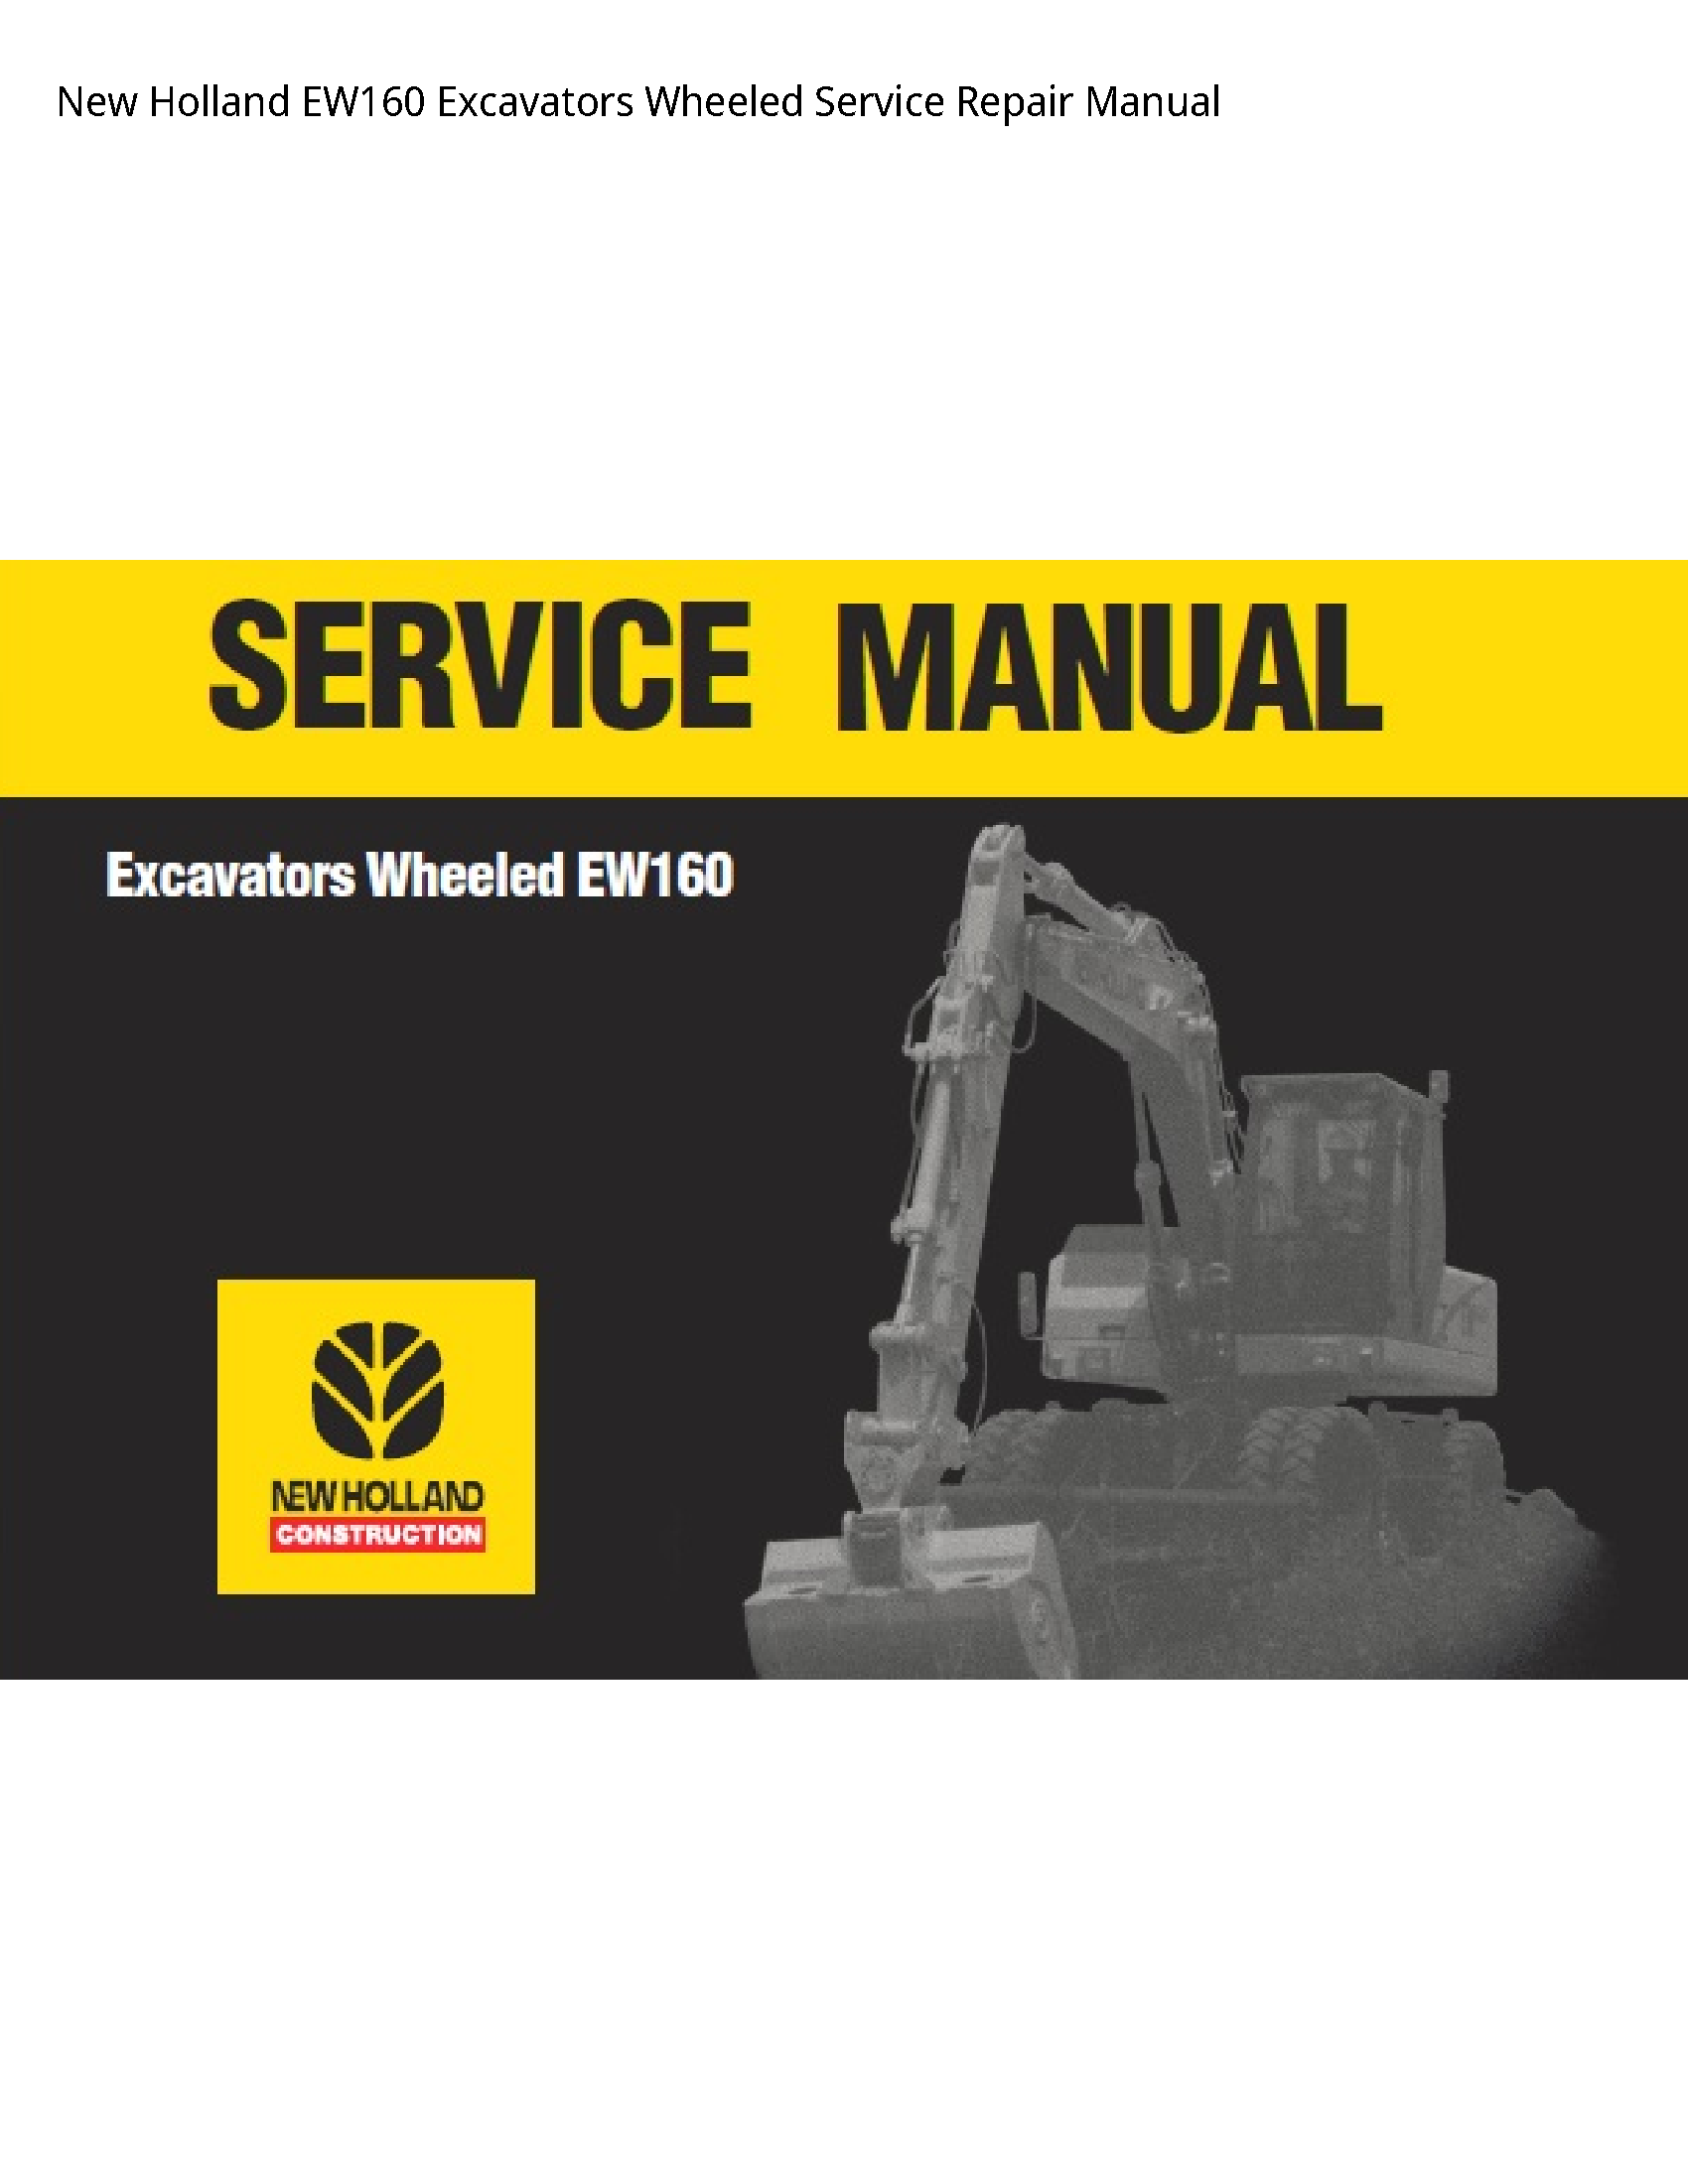 New Holland EW160 Excavators Wheeled manual